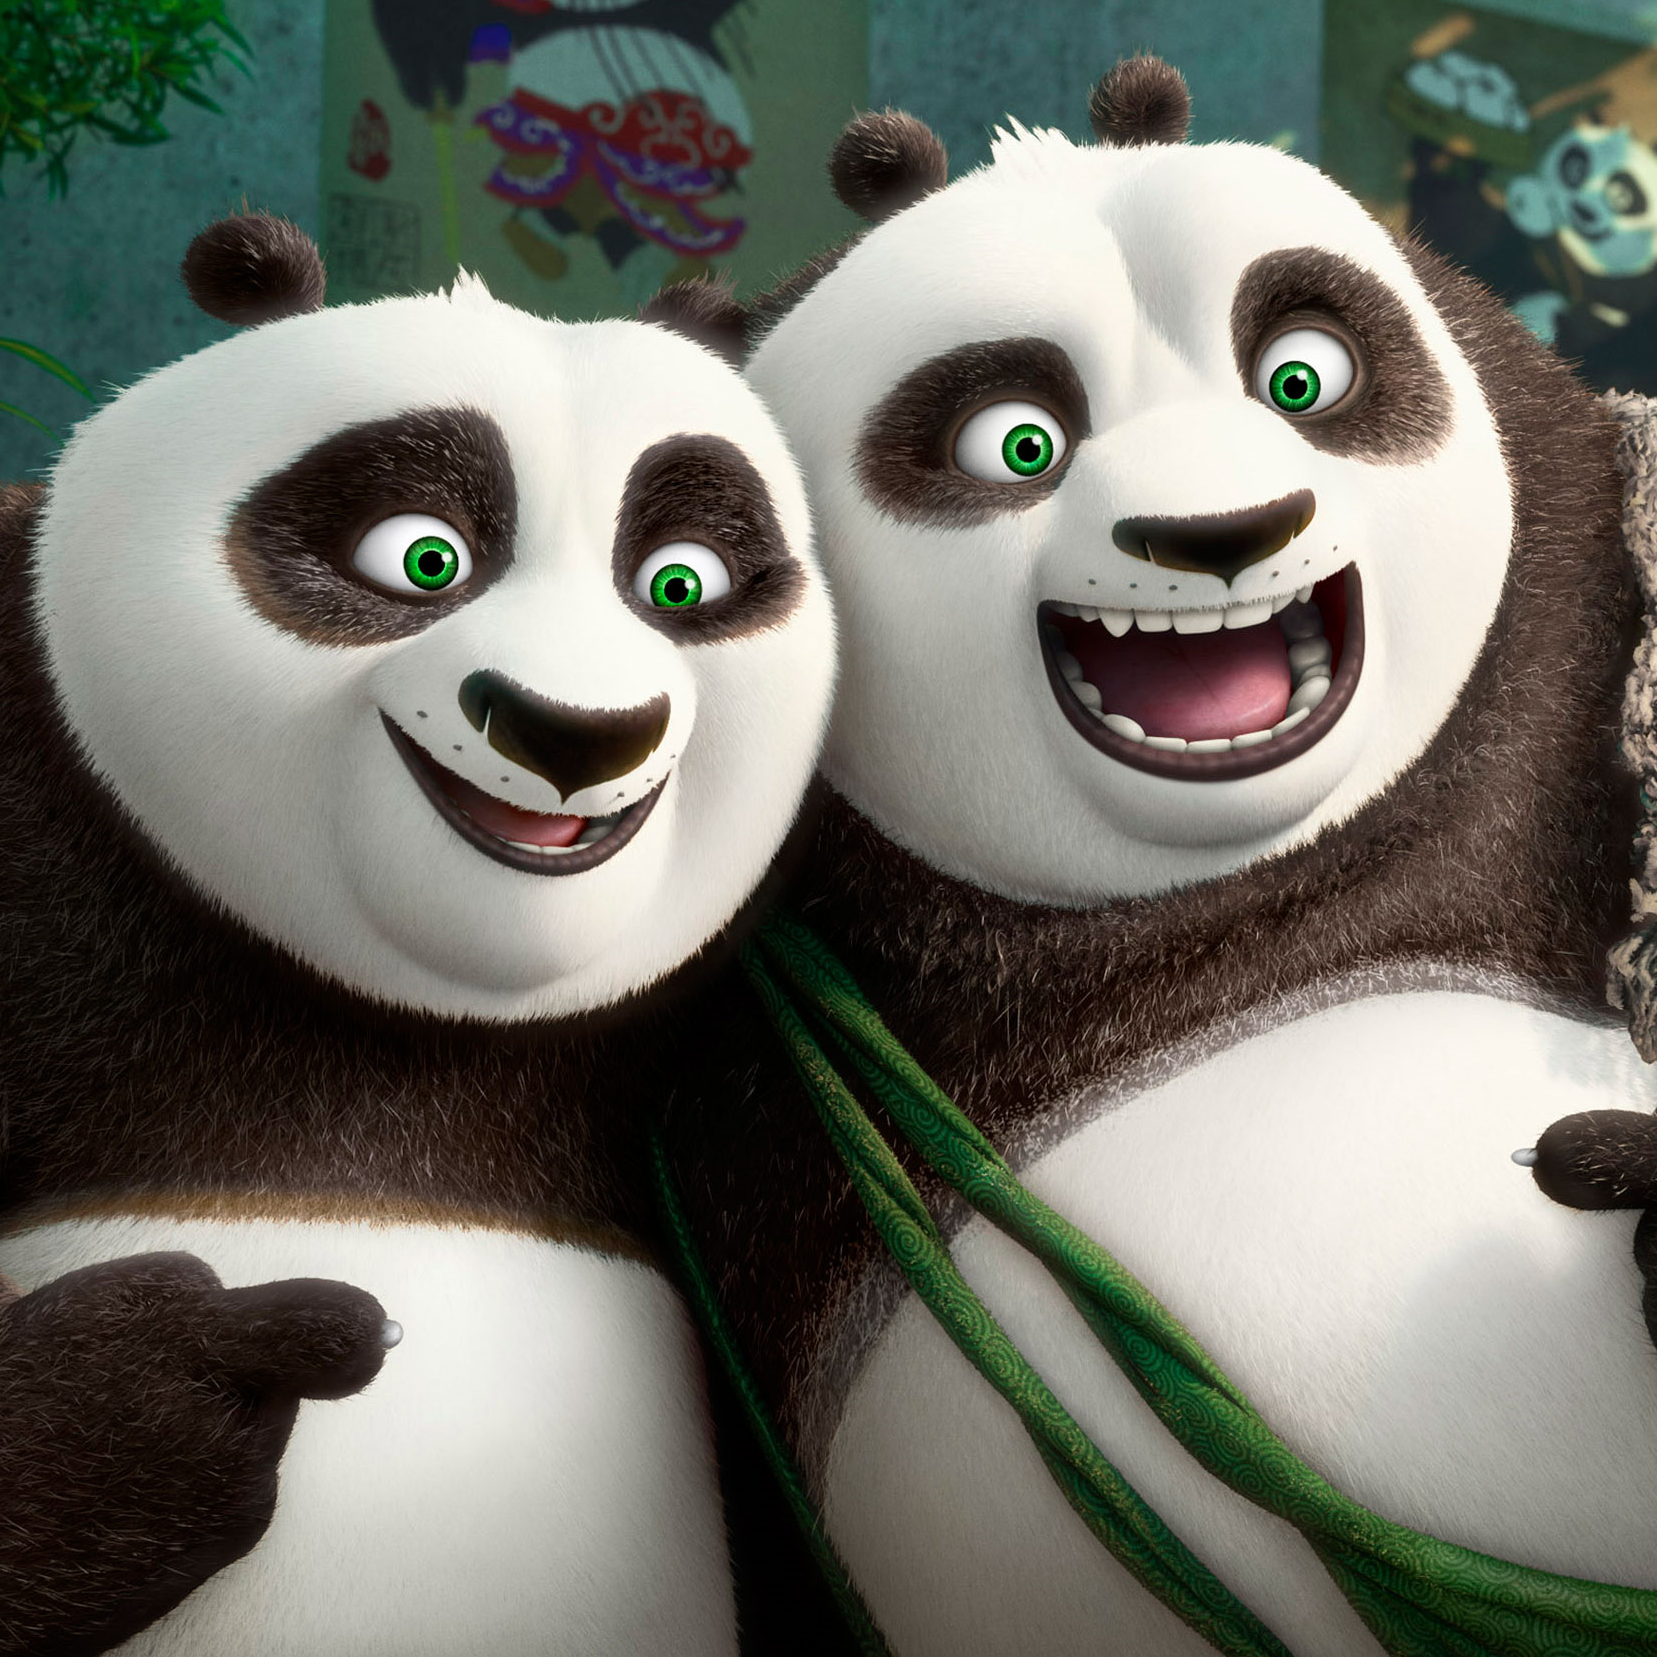 Assista ao novo trailer oficial de Kung Fu Panda 3